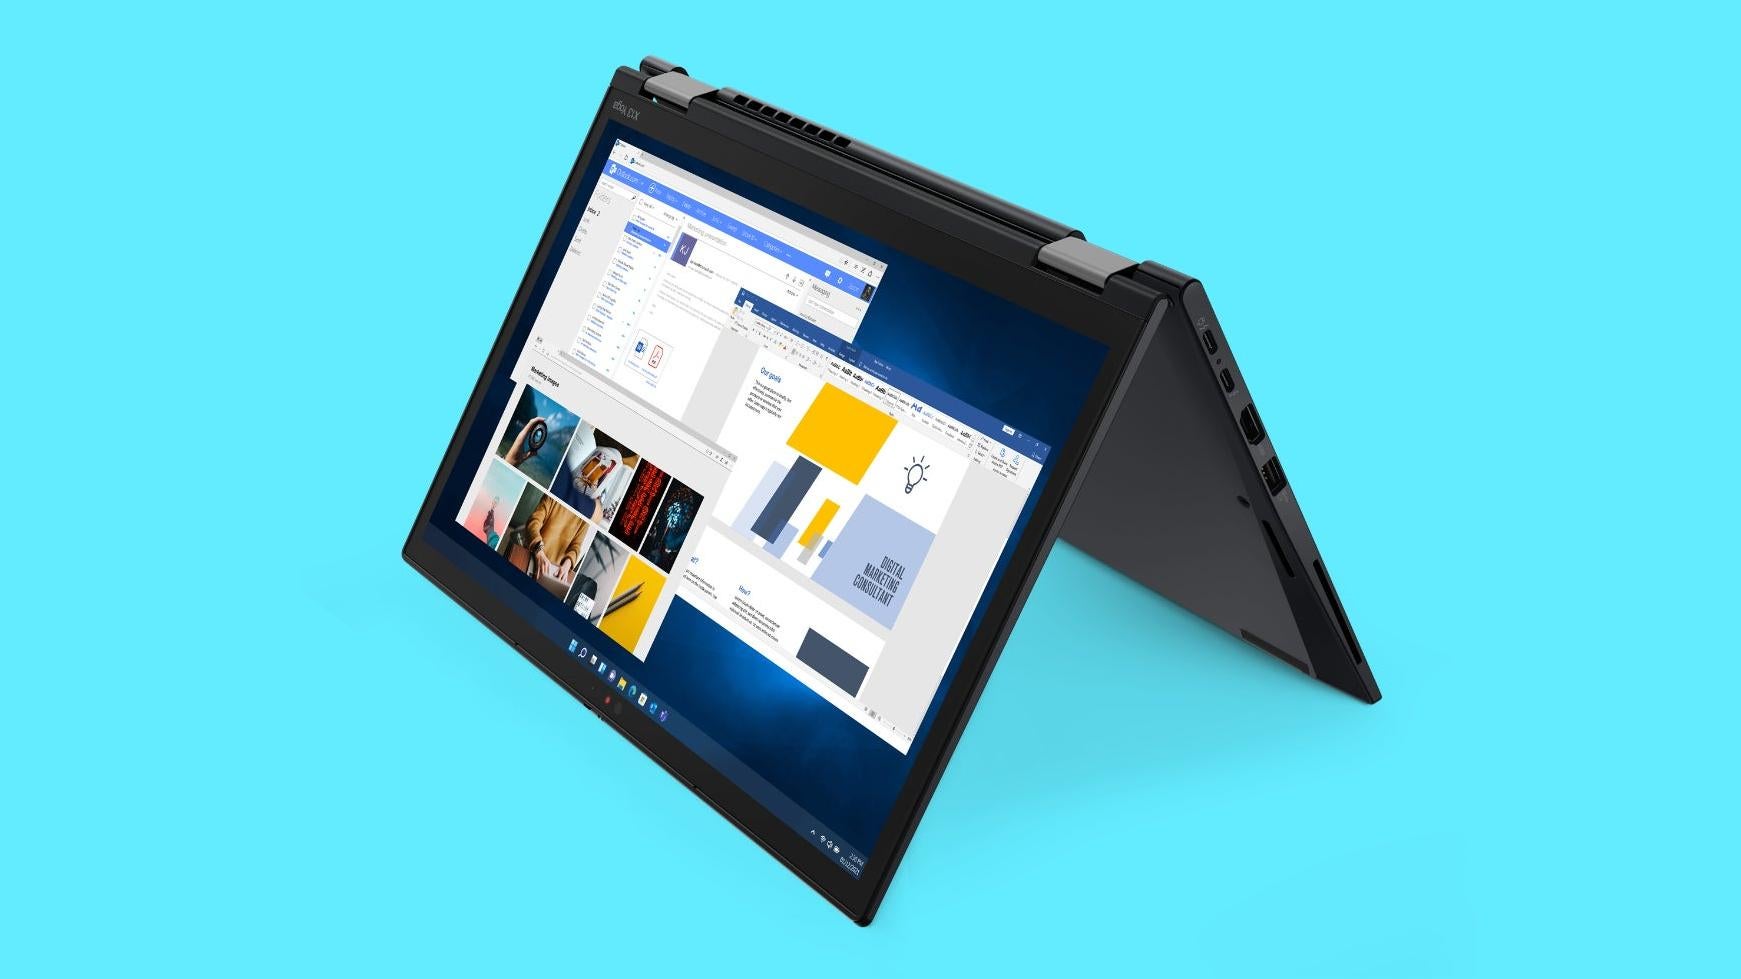 Lenovo ThinkPad X13 Yoga (Image: Lenovo)